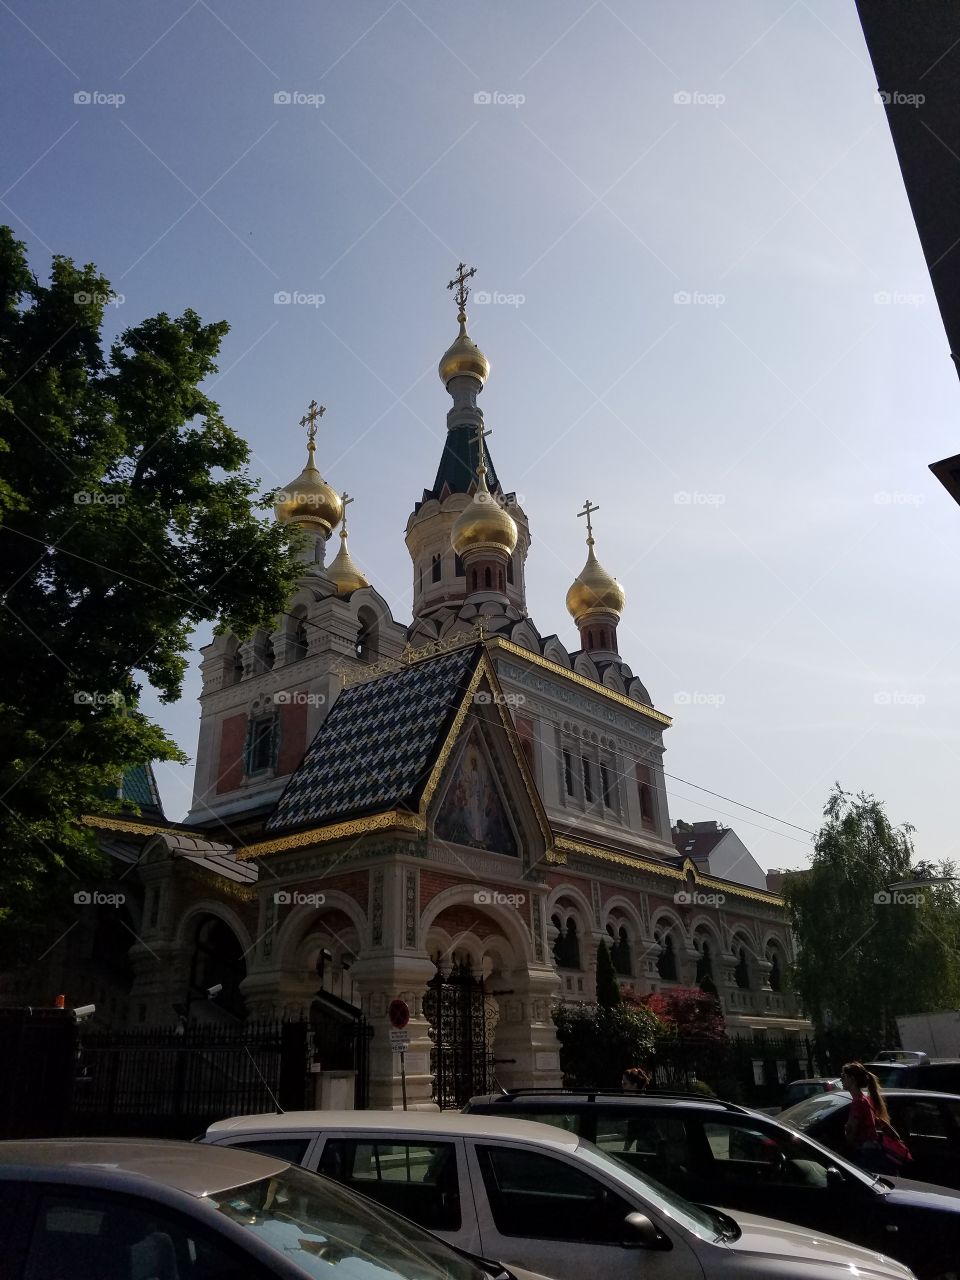 Russian Orthodox church, Vienna